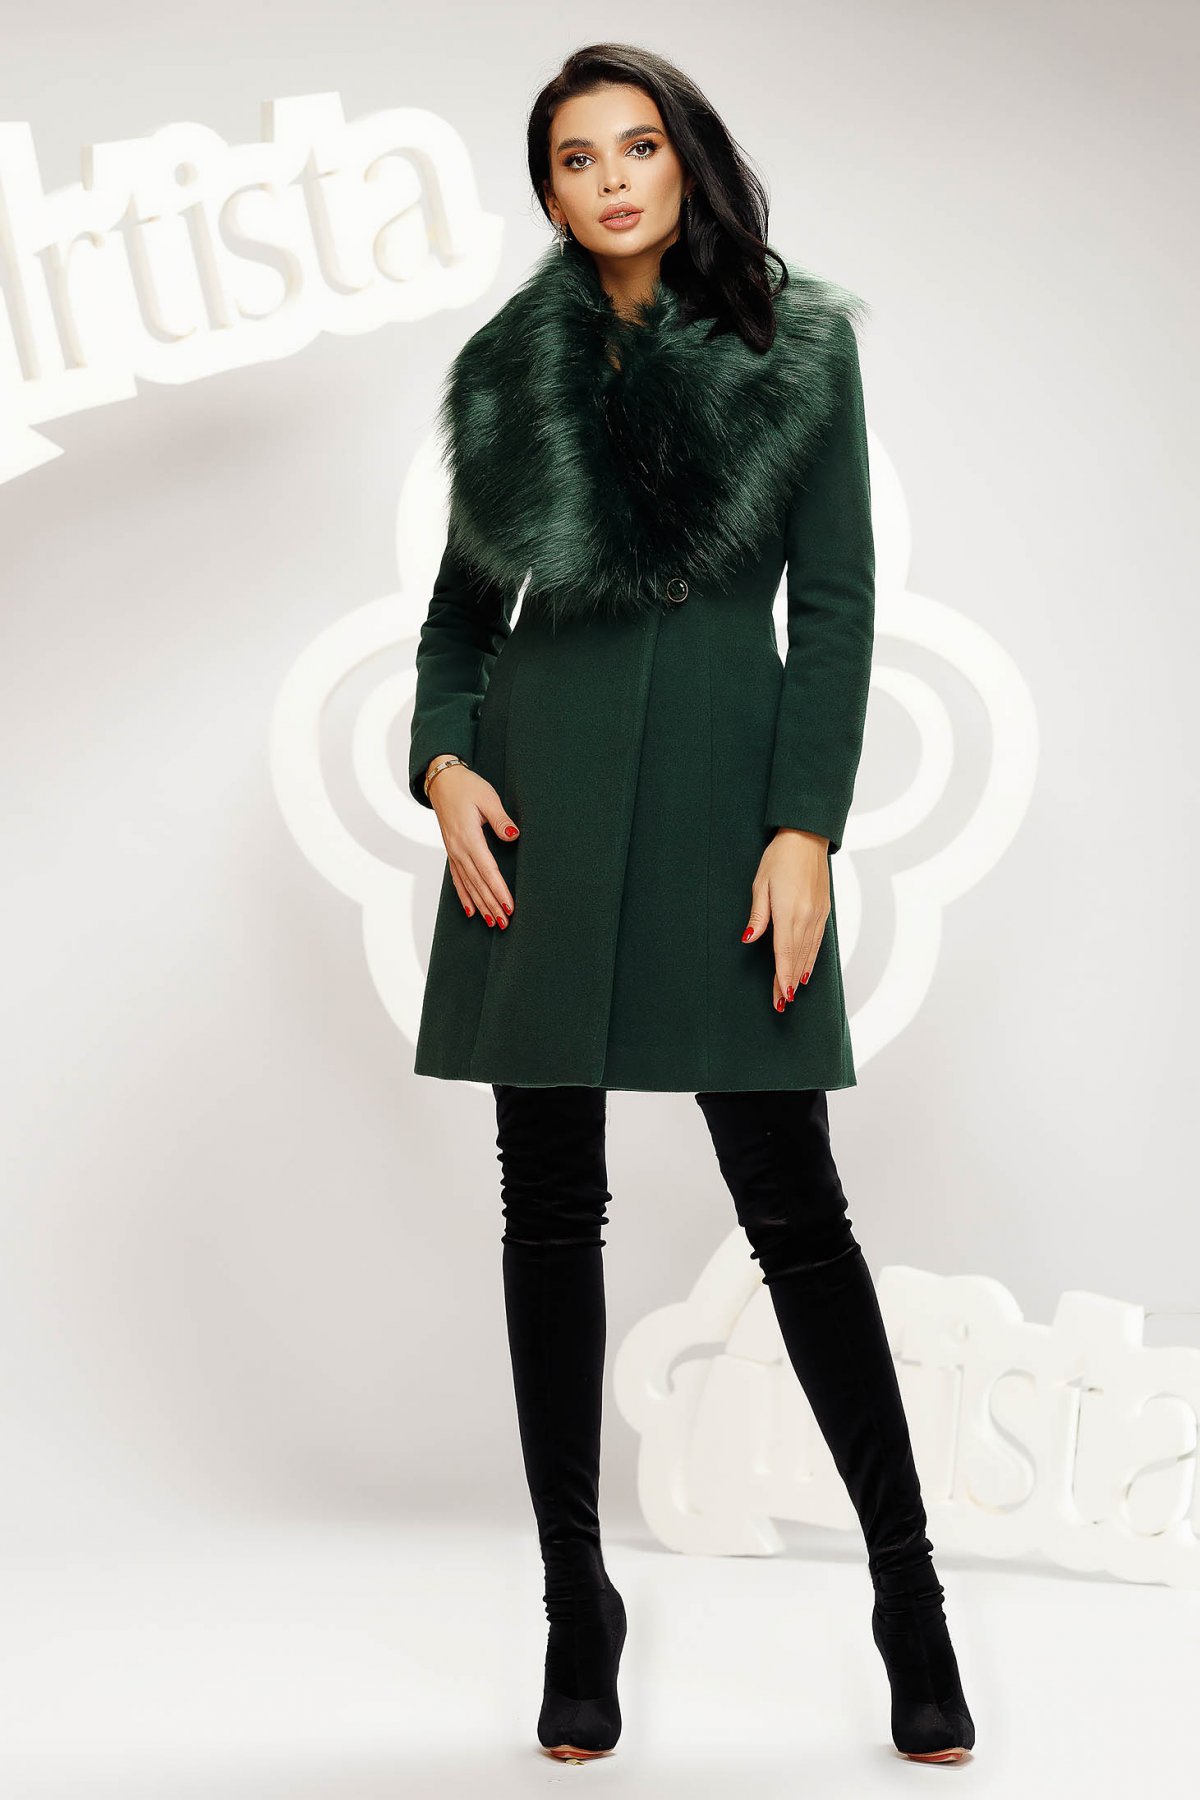 Palton Artista verde-inchis elegant cambrat accesorizat cu blana ecologica Artista imagine 2022 13clothing.ro